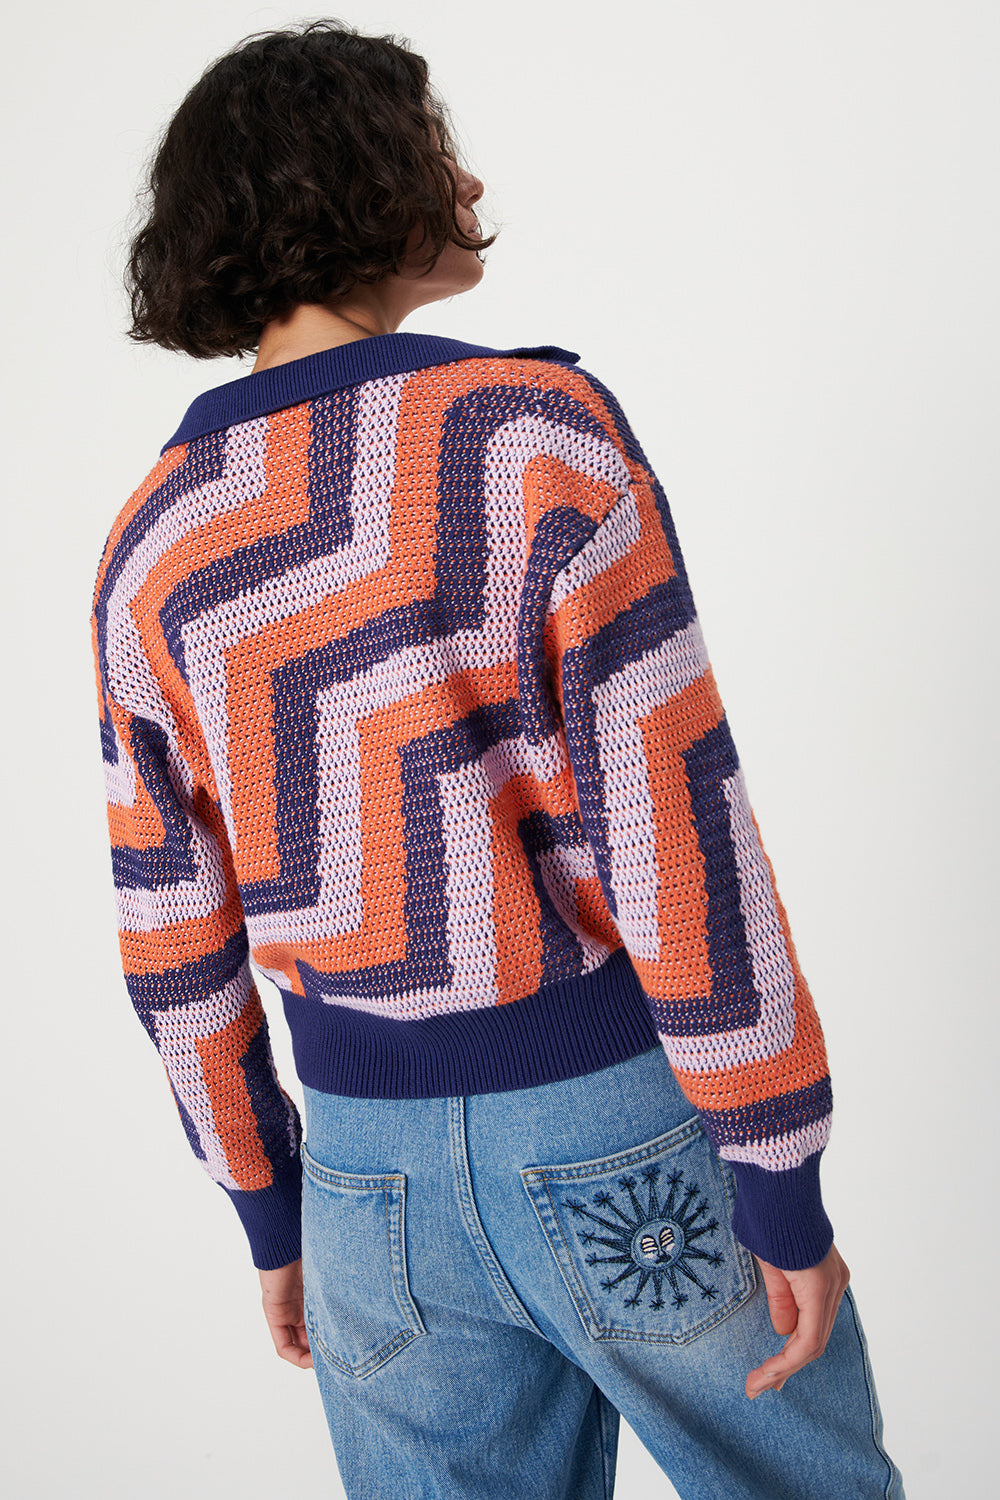 Rain Knitted Sweater